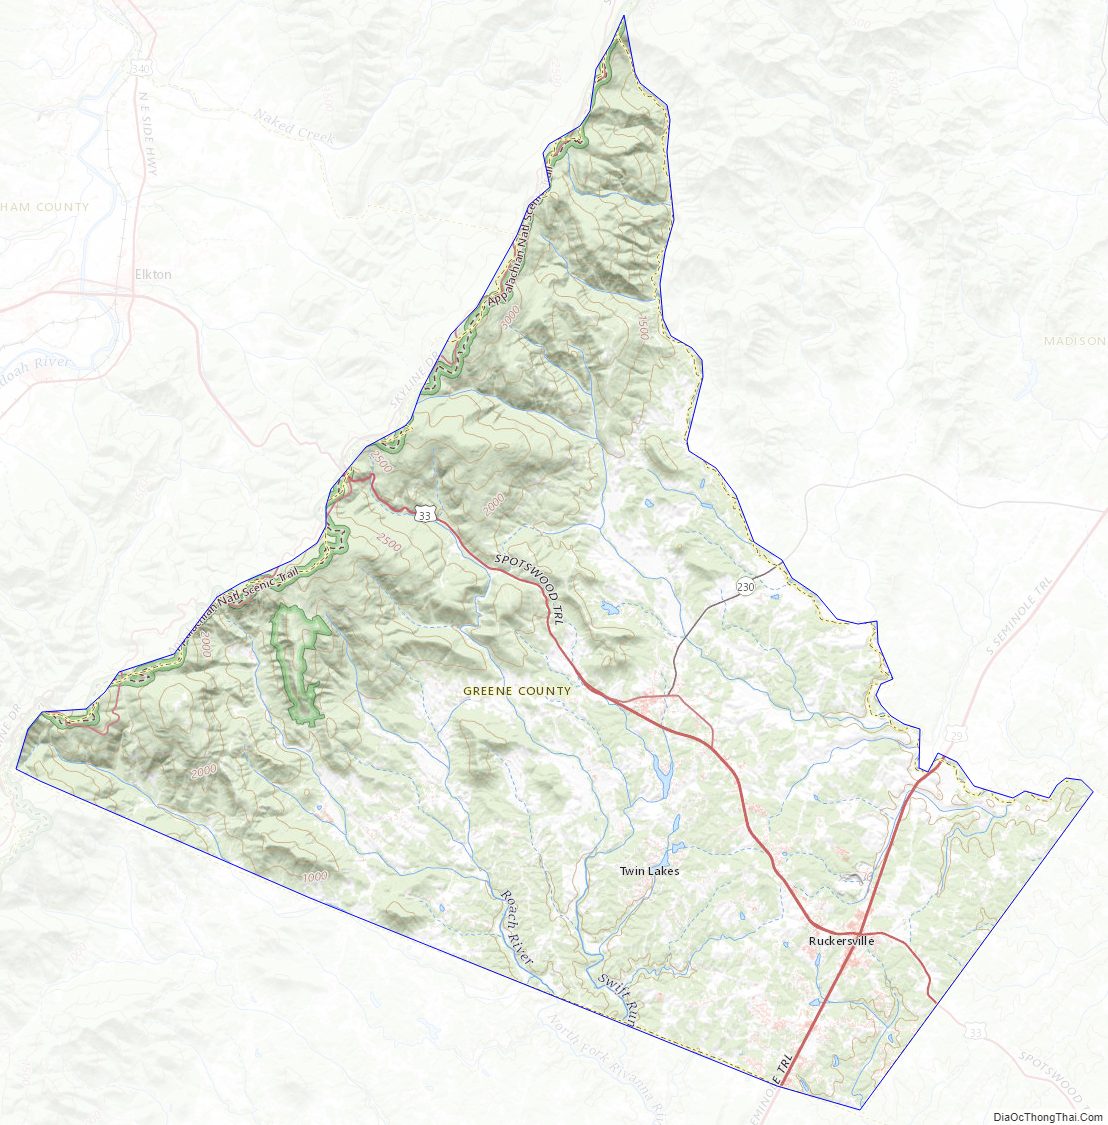 Topographic map of Greene County, Virginia